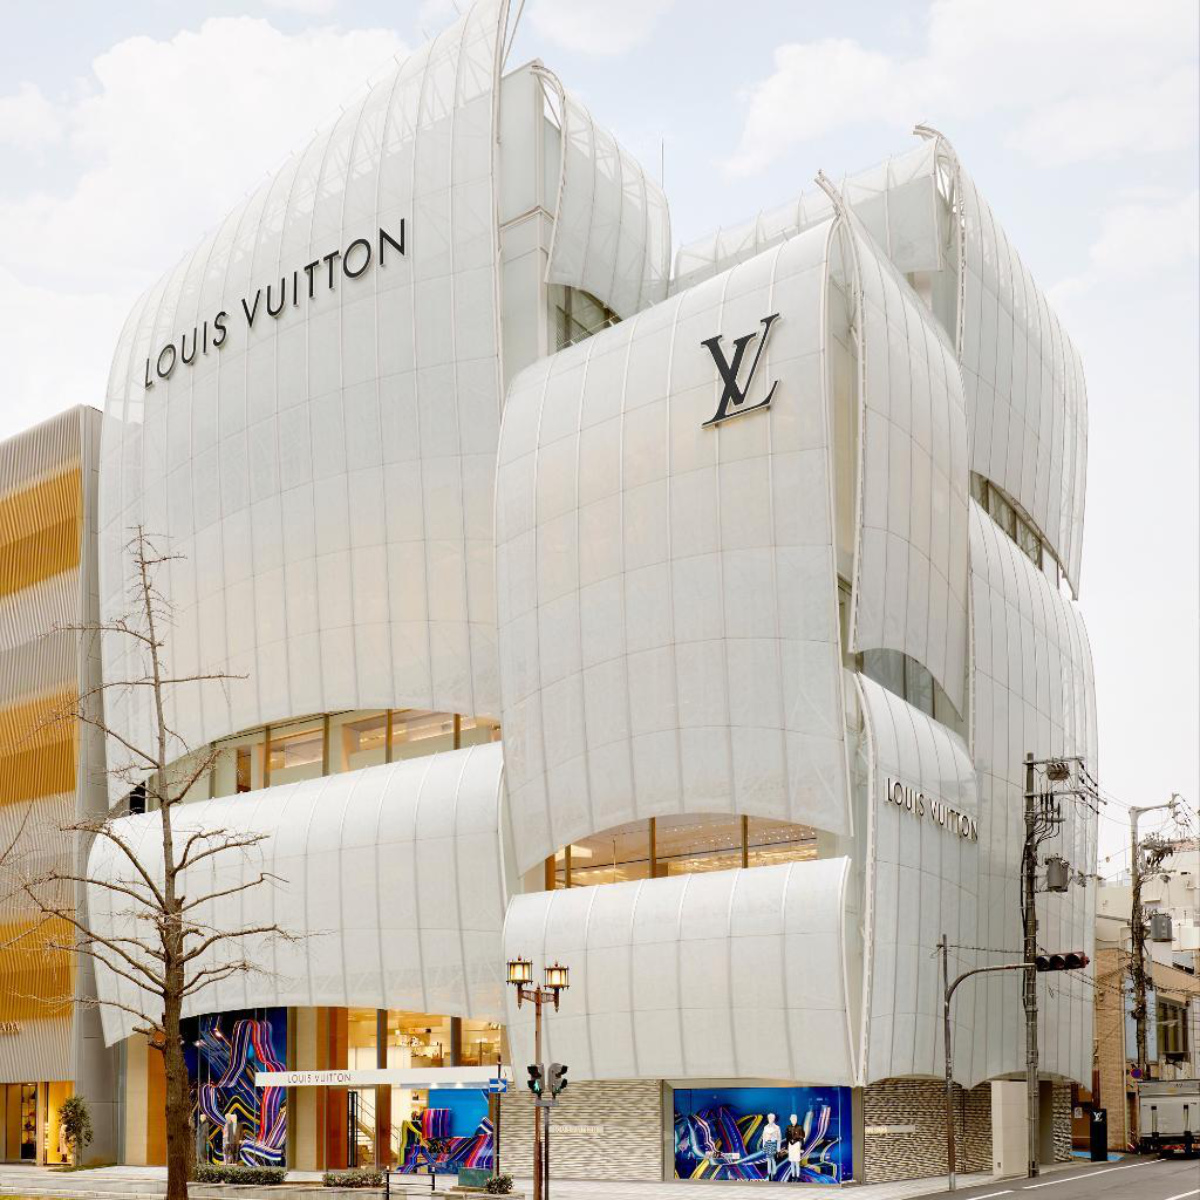 Louis Vuiton’s Maison Osaka Midosuji - coming soon